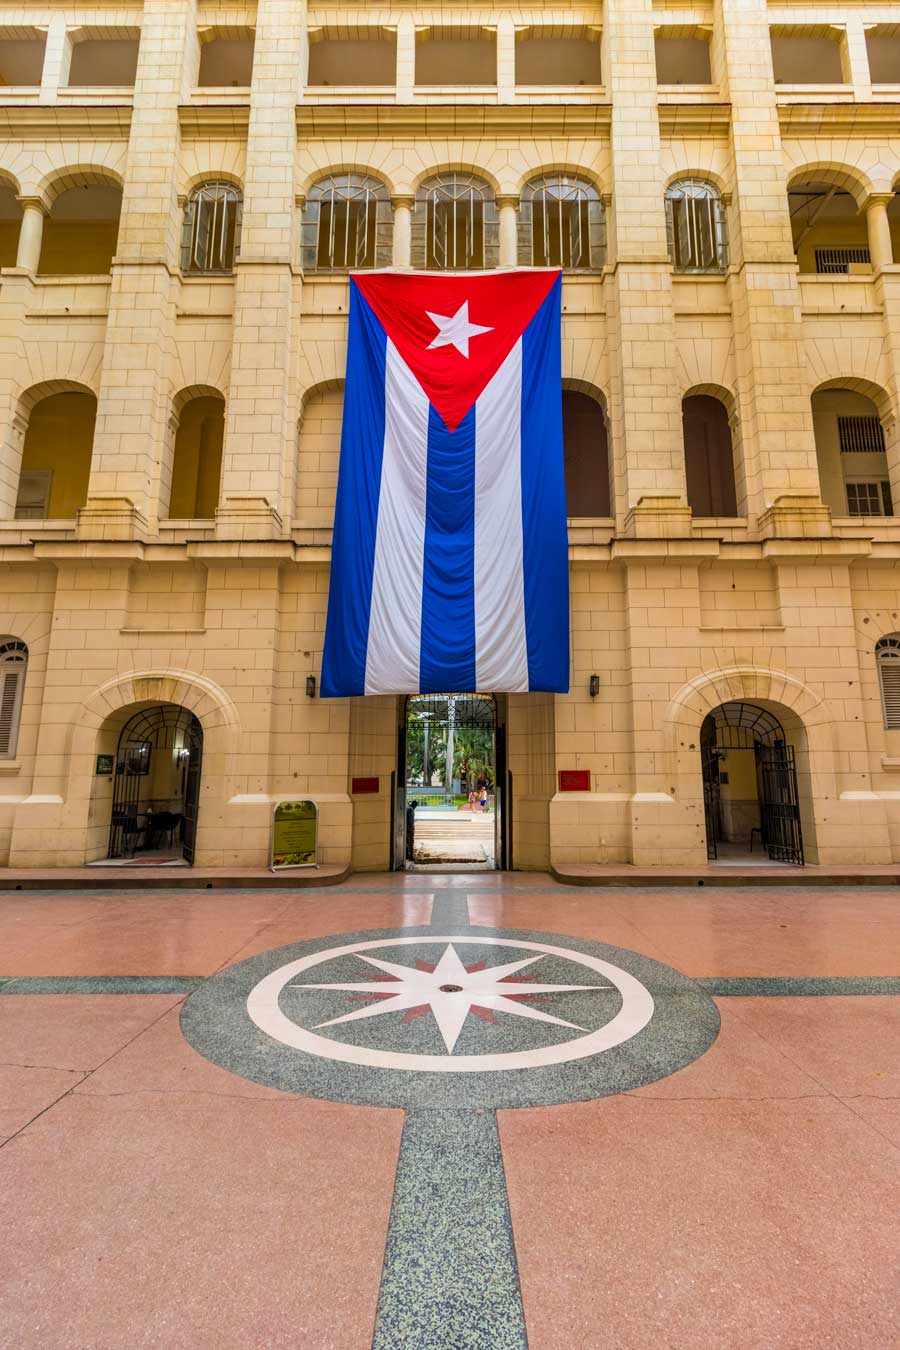 large cuban flag inside a building courtyard